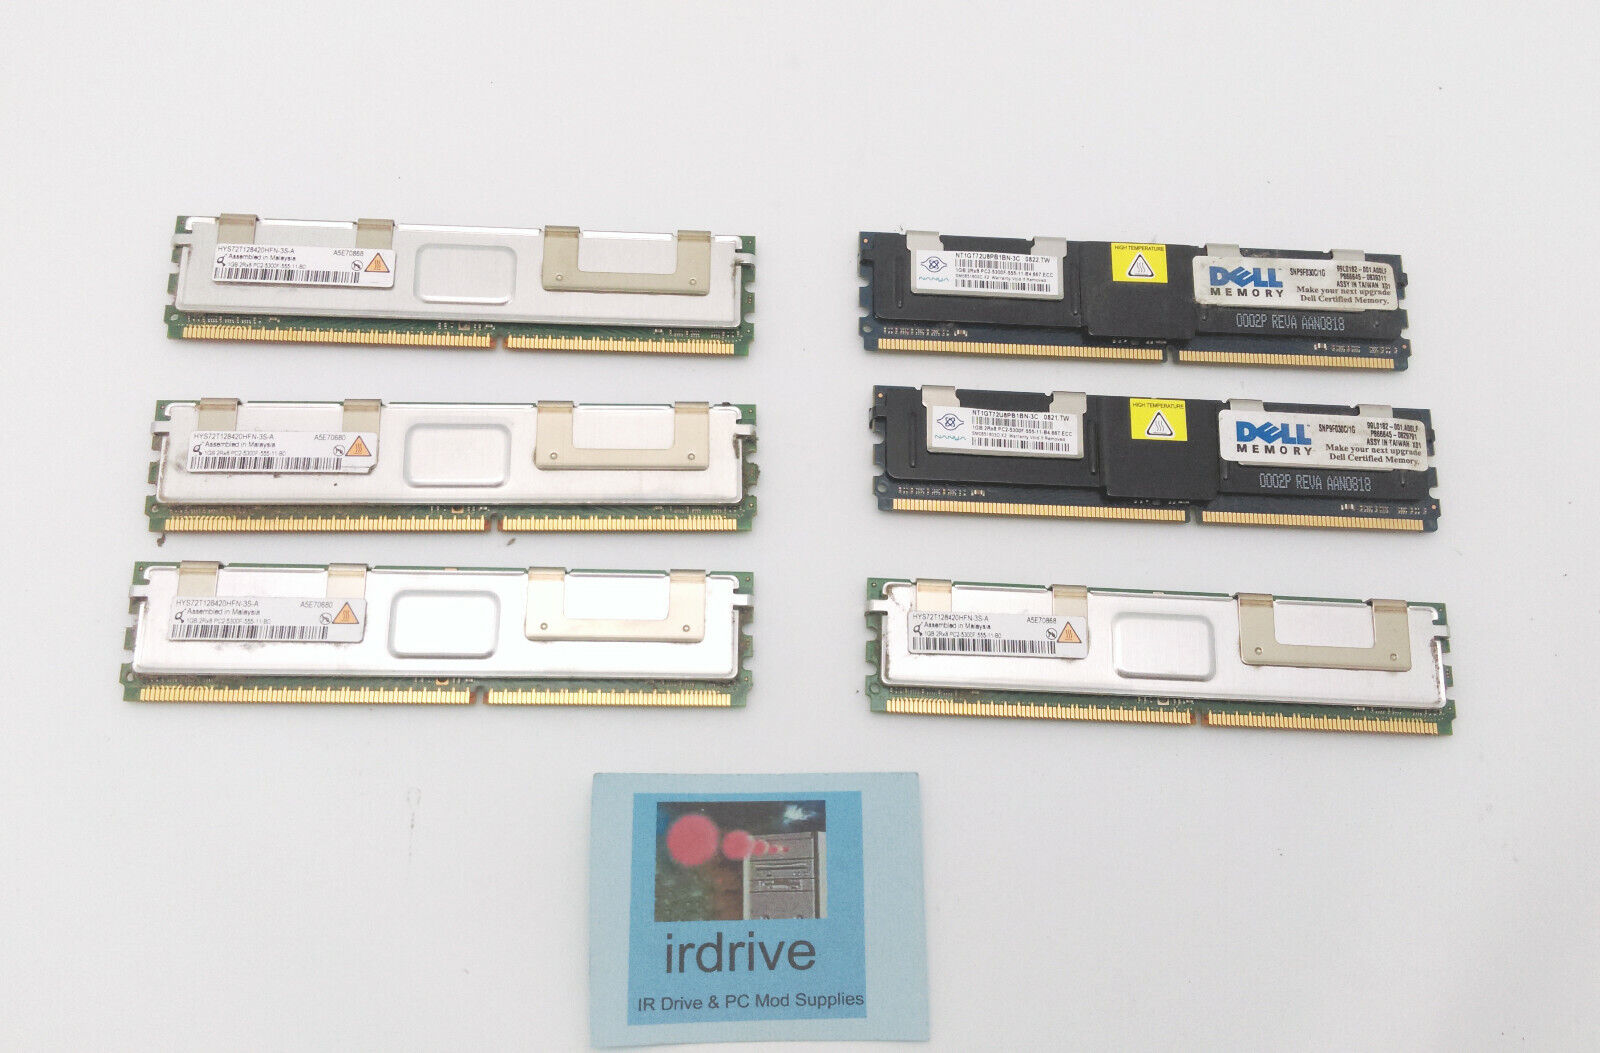 6GB (1GBx6) 2Rx8 PC2-5300F DDR2 240-pin for Dell Precision 490 Server Memory Kit